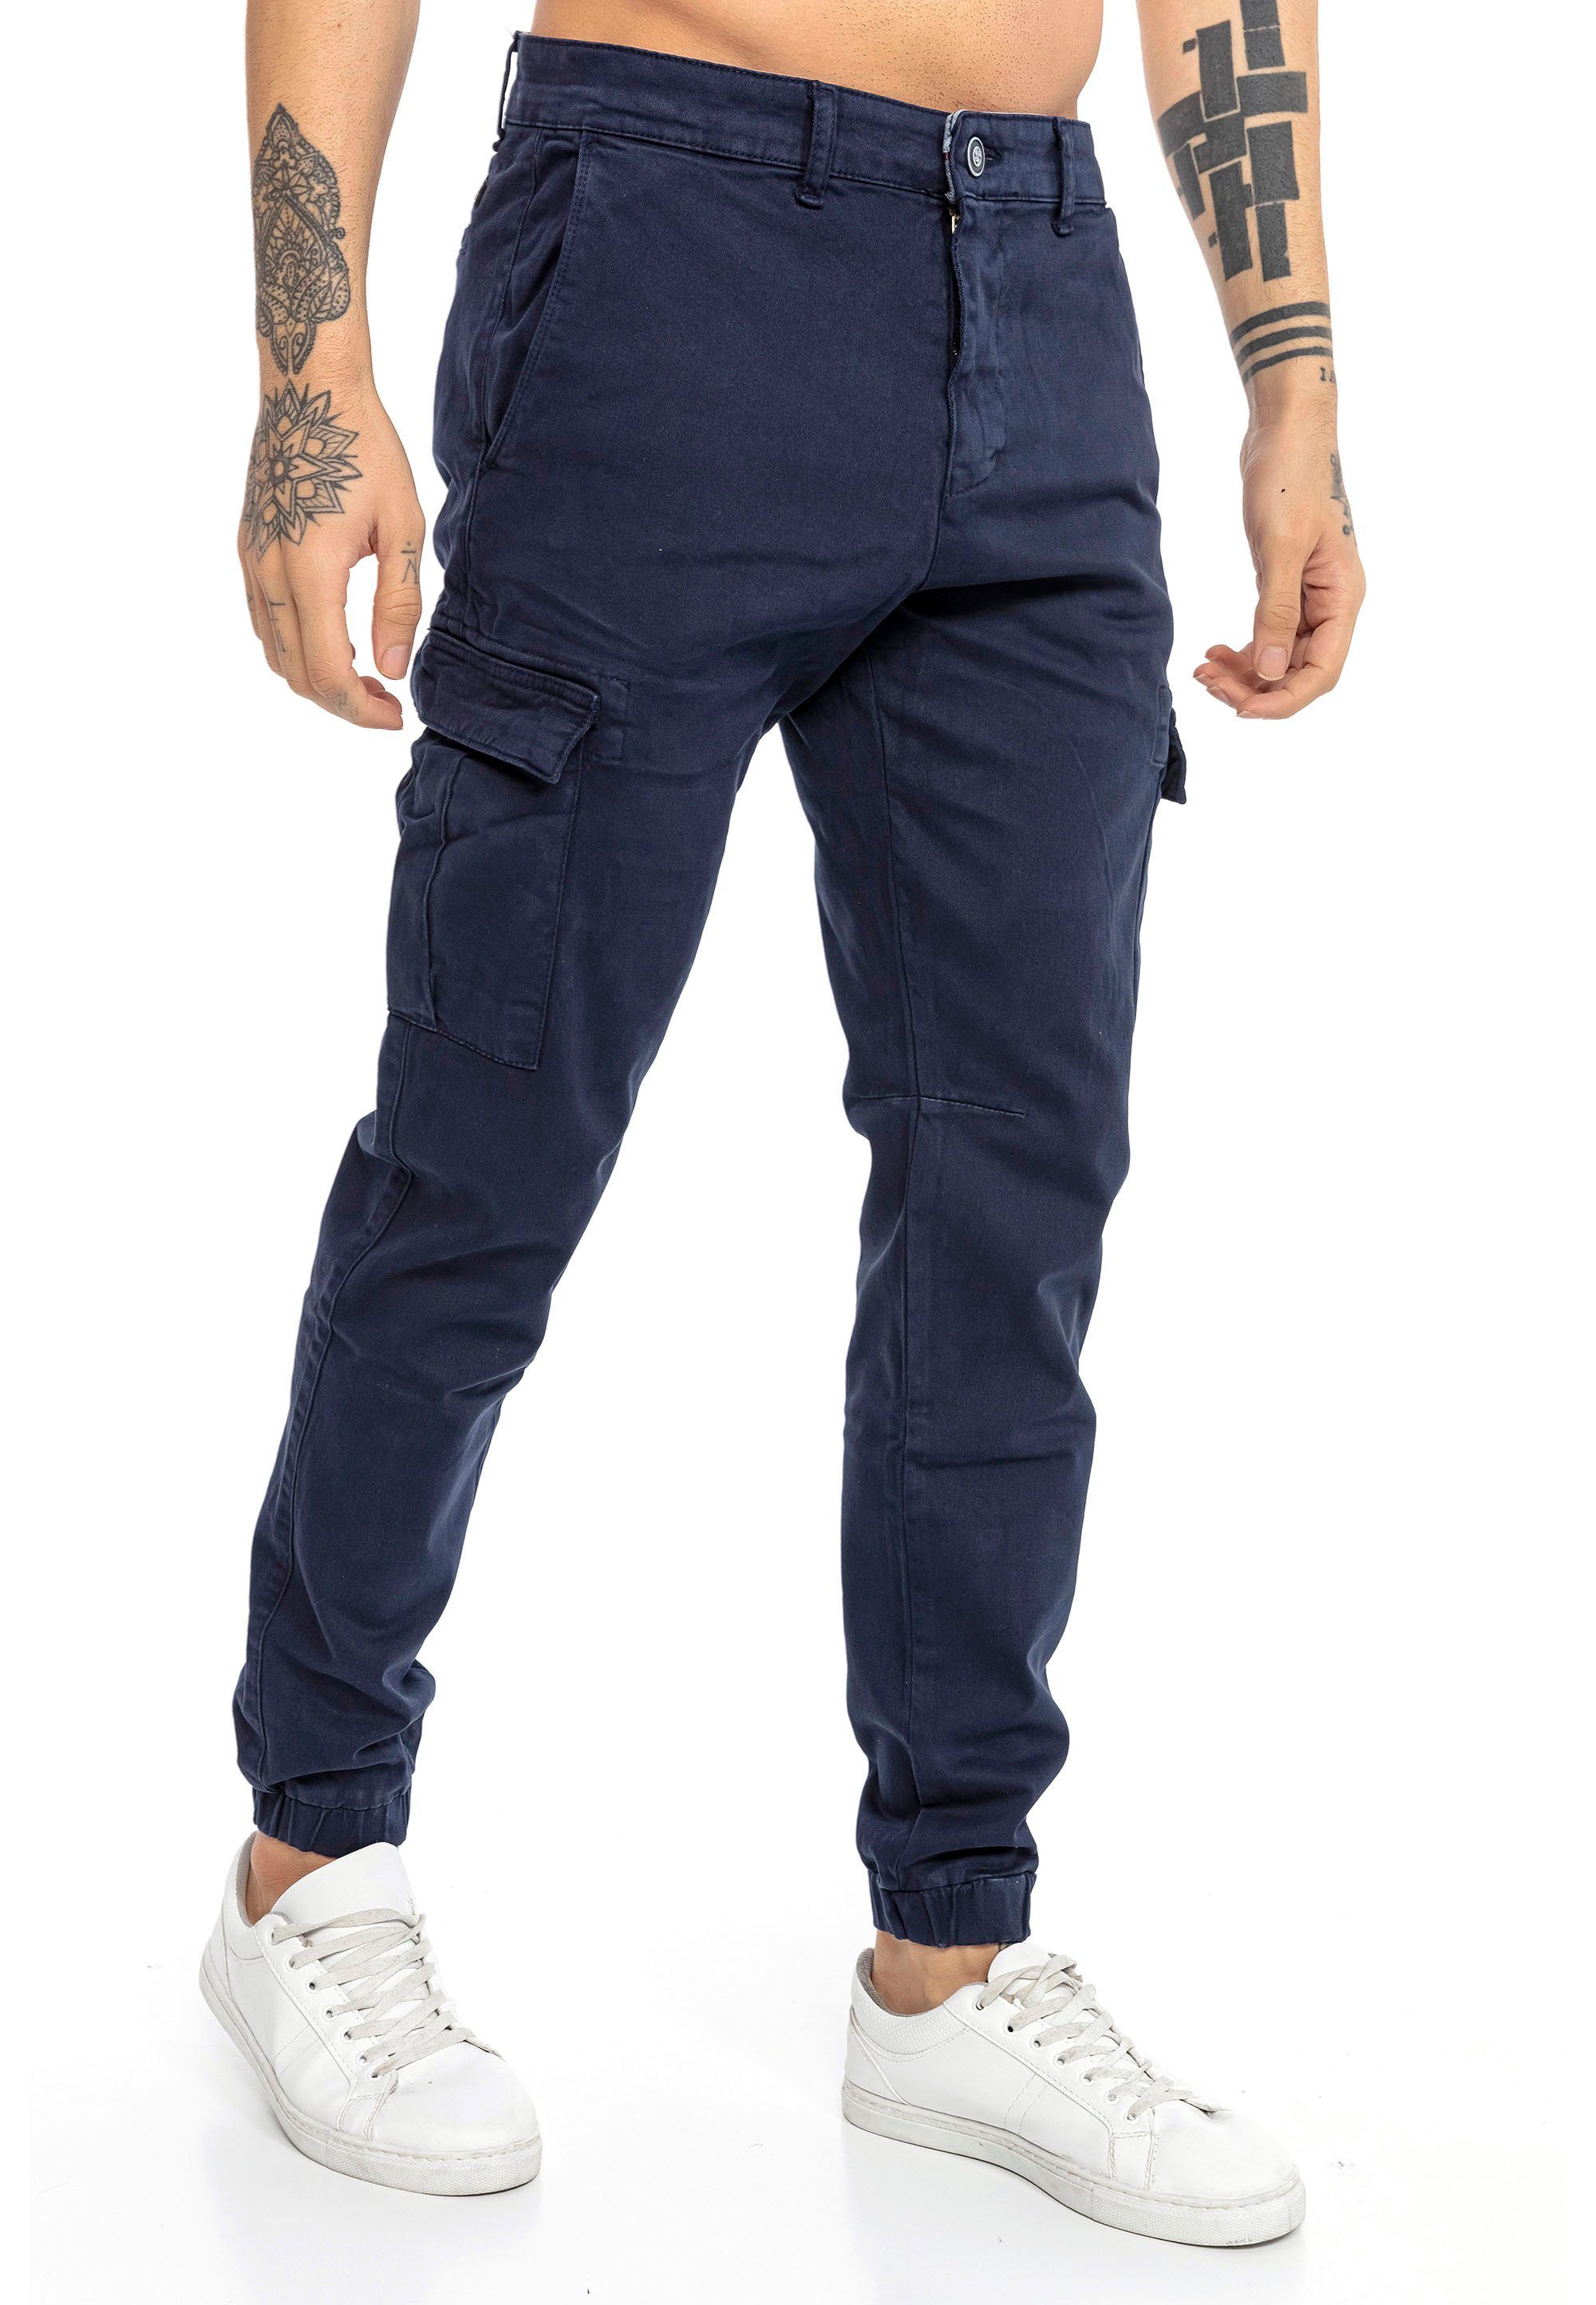 RedBridge Cargohose Stylische Jogger Jeans Cargo Hose Twill Navy Blau